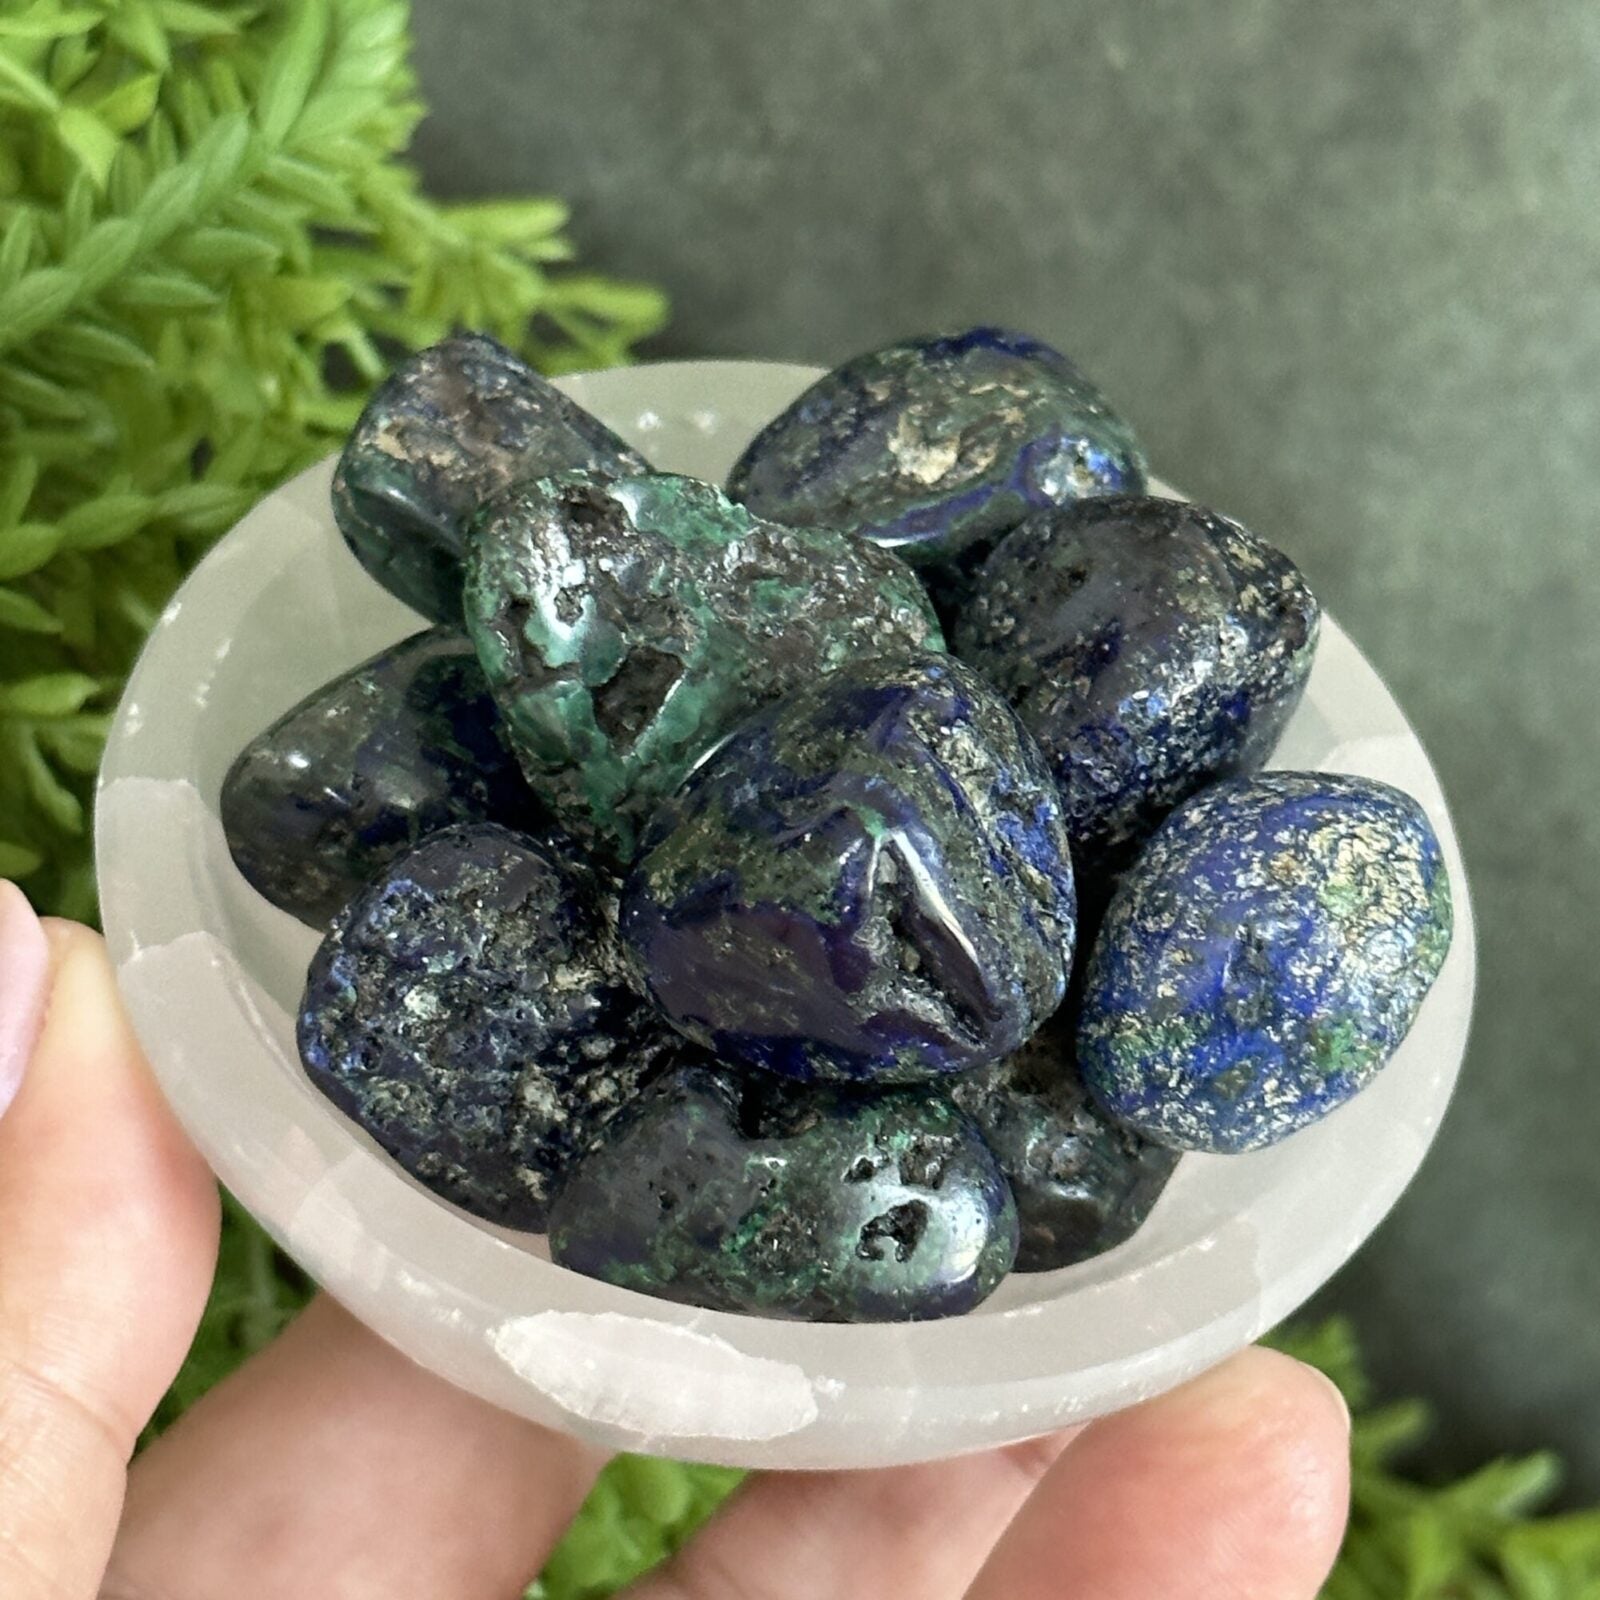 Rare Azurite and Malachite tumbled stones